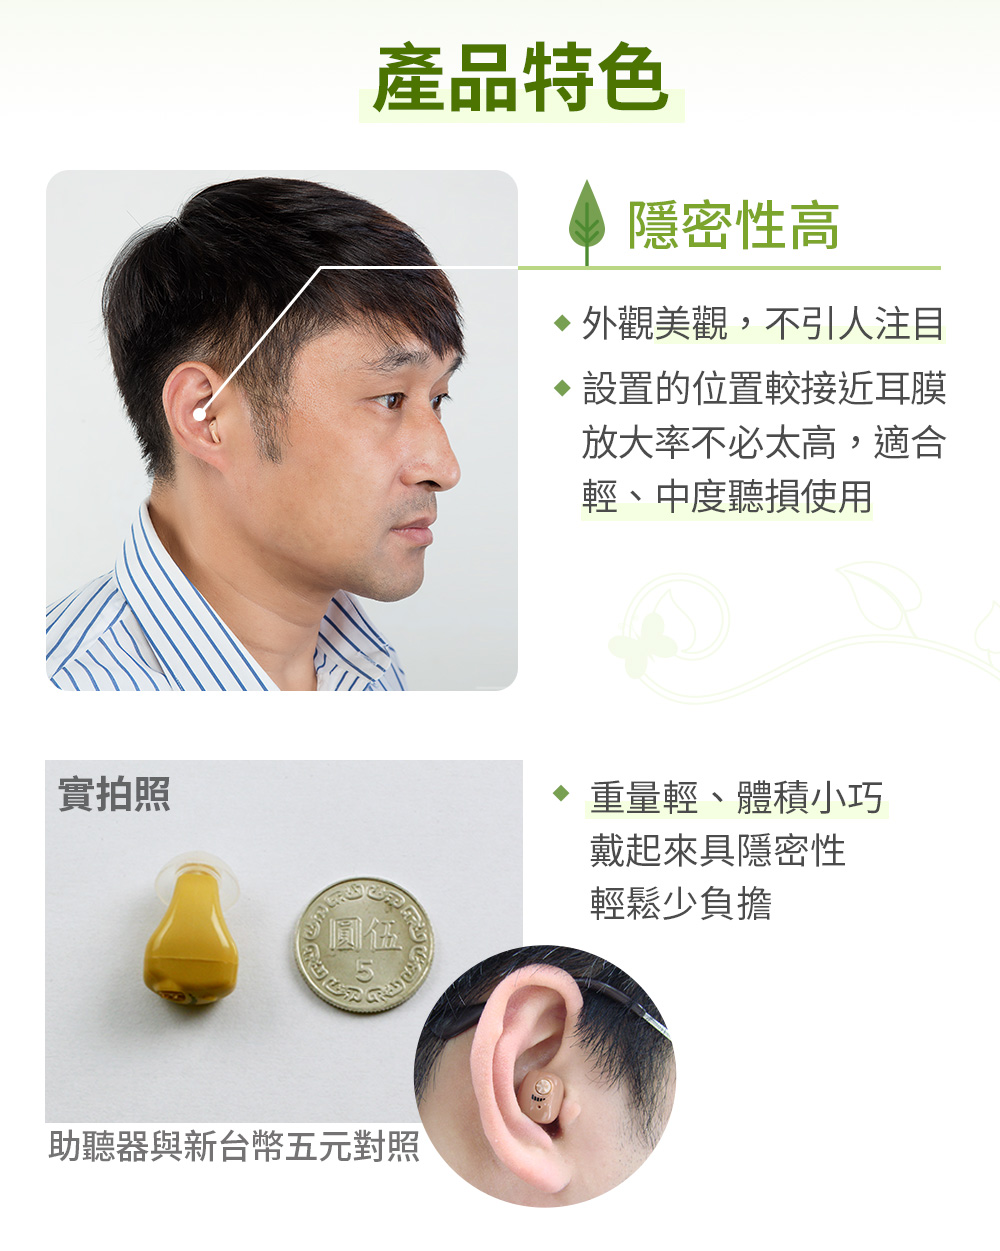 耳寶,6SA2,補助資訊,助聽器